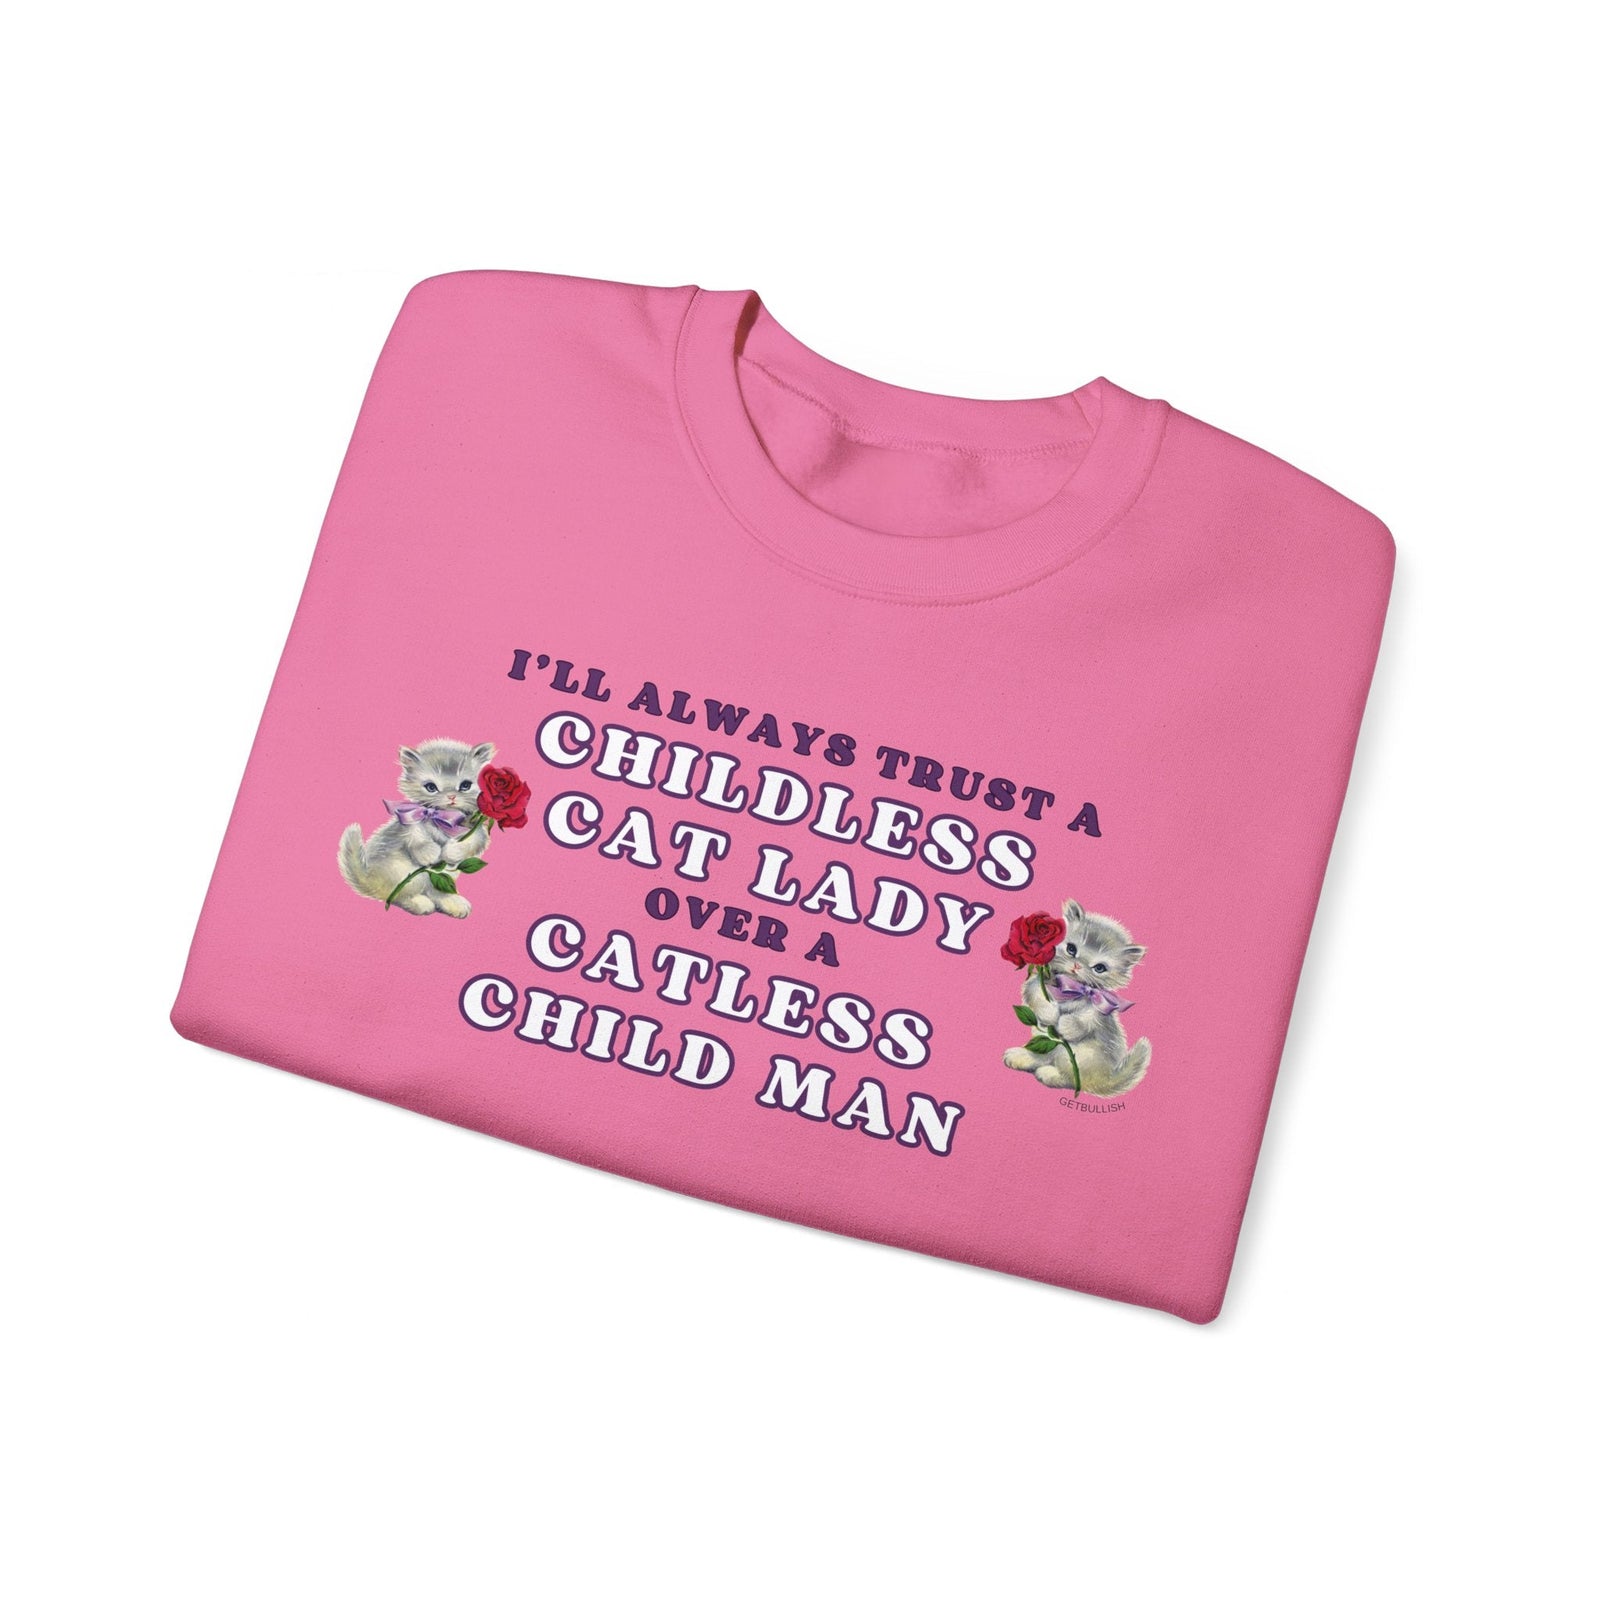 Childless Cat Lady Over Catless Child Man Unisex Heavy Blend™ Crewneck Sweatshirt